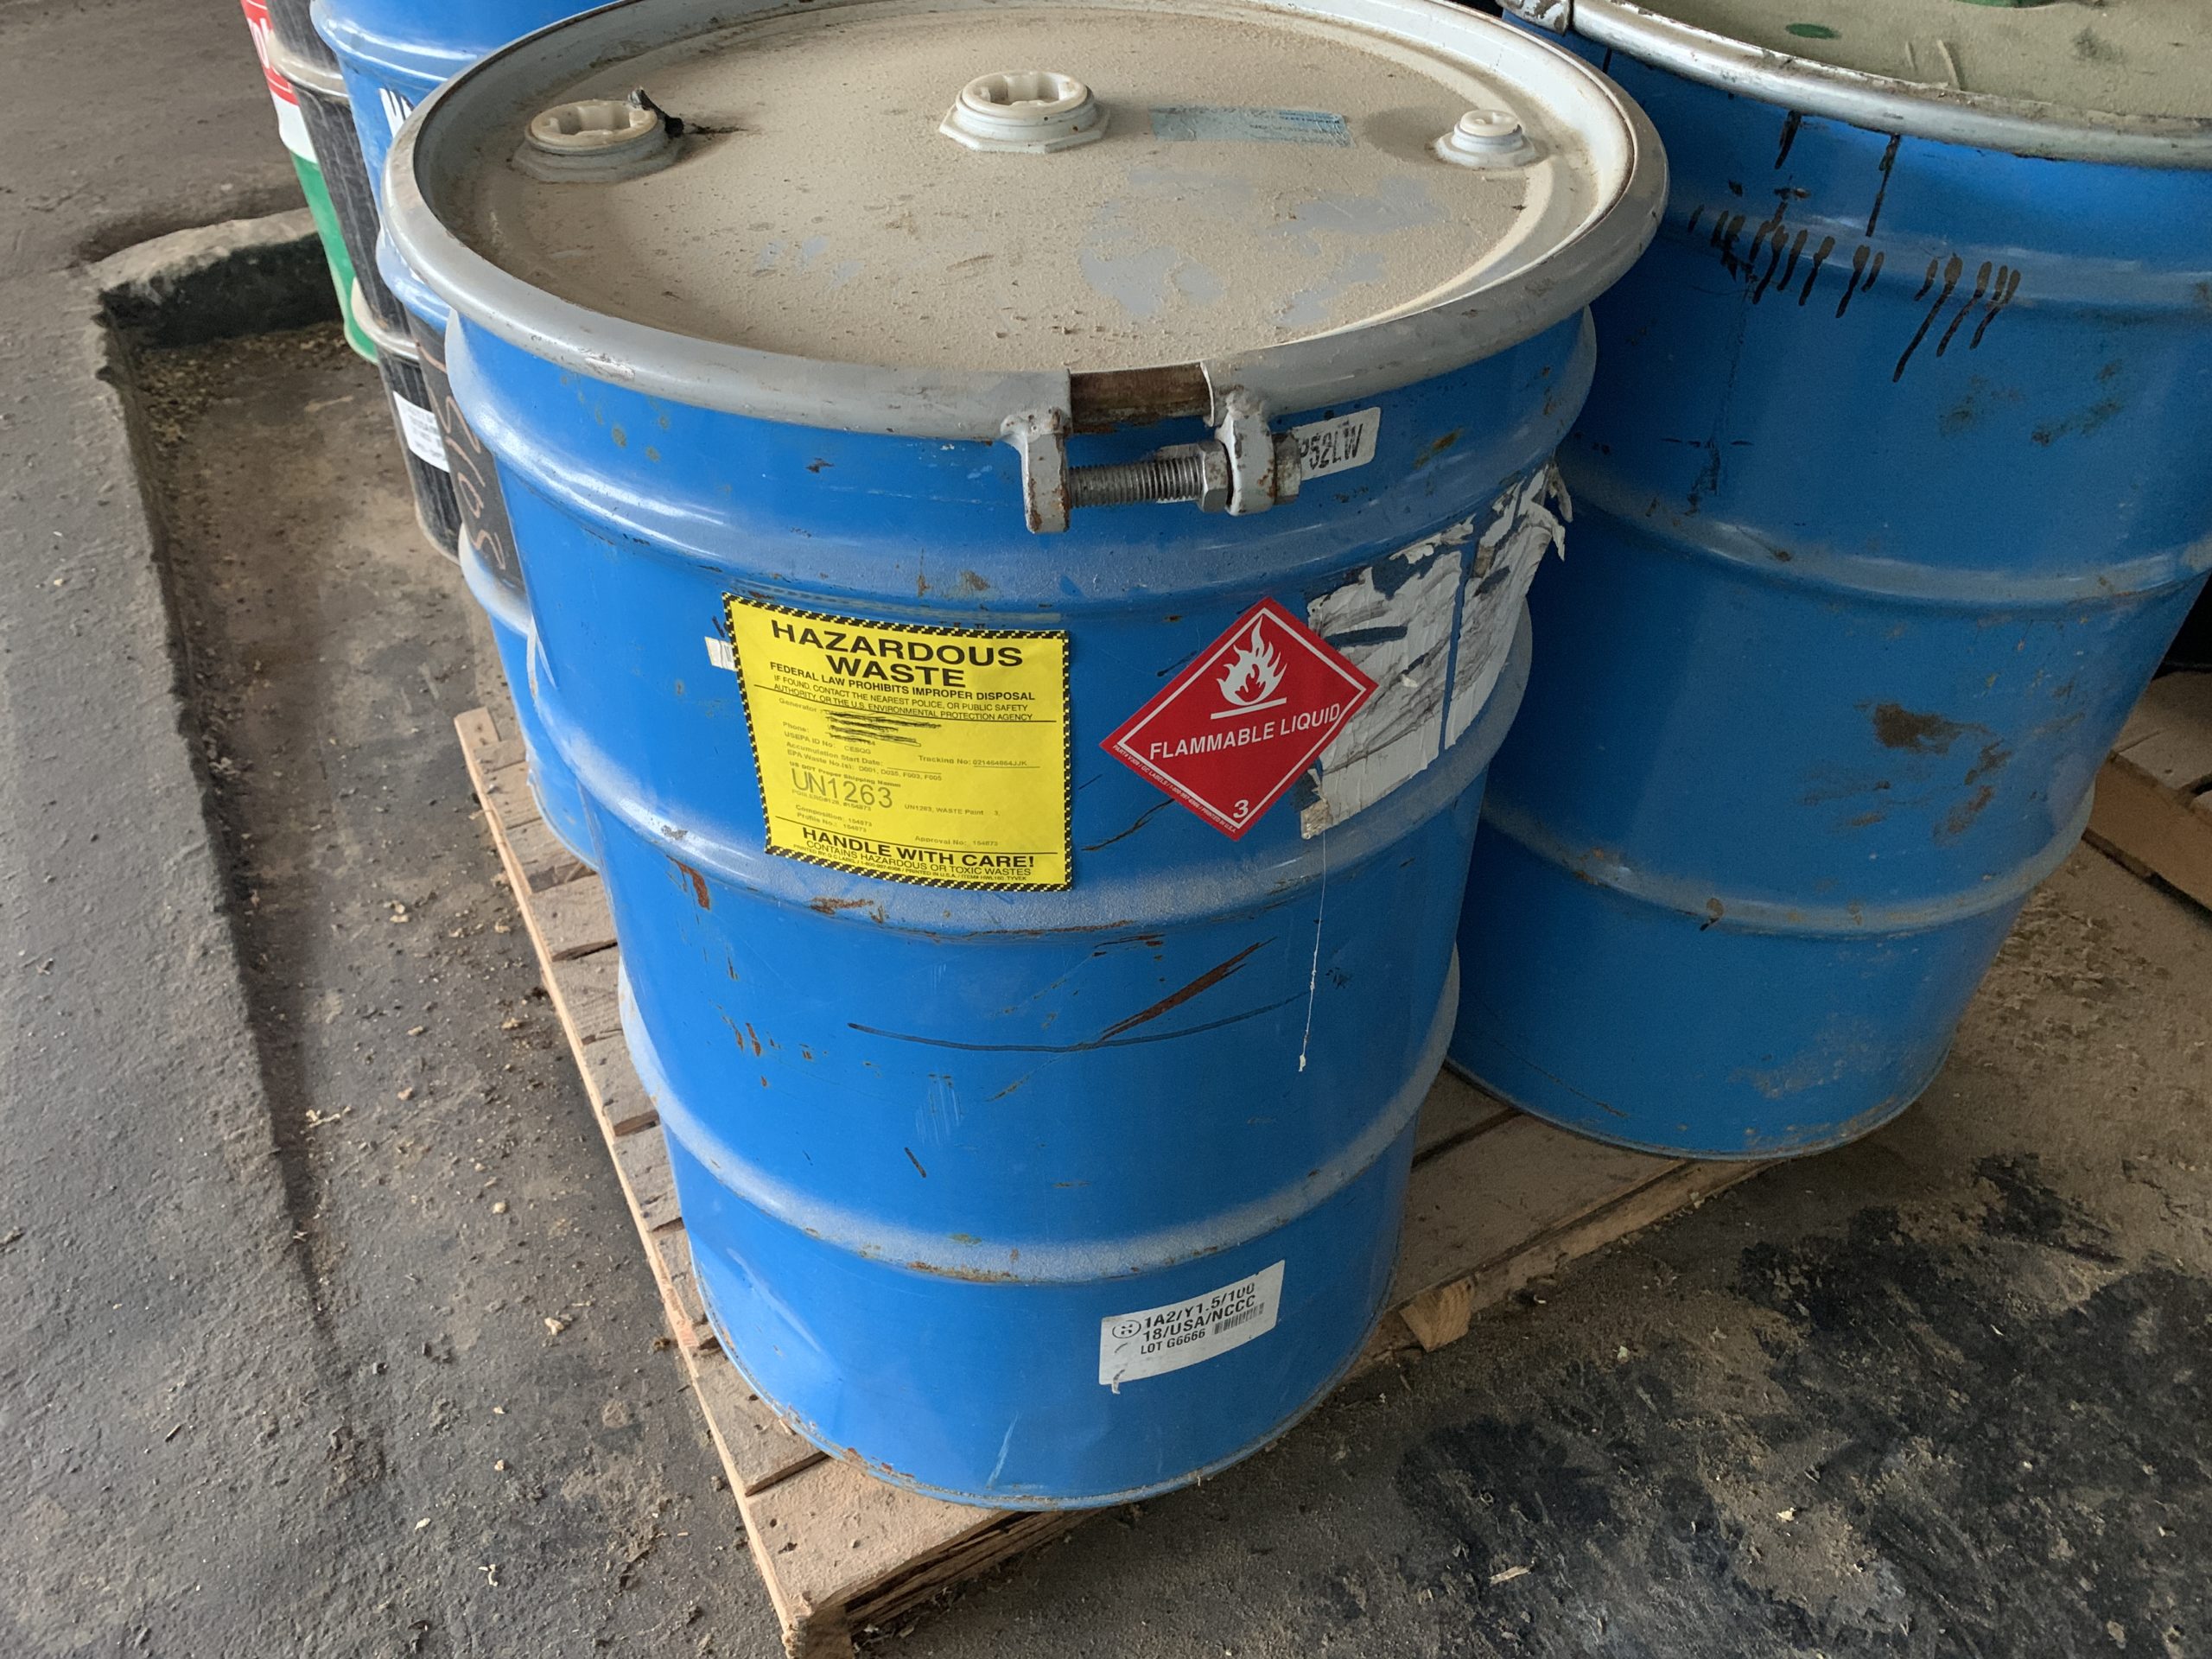 Hazardous waste drum labeled